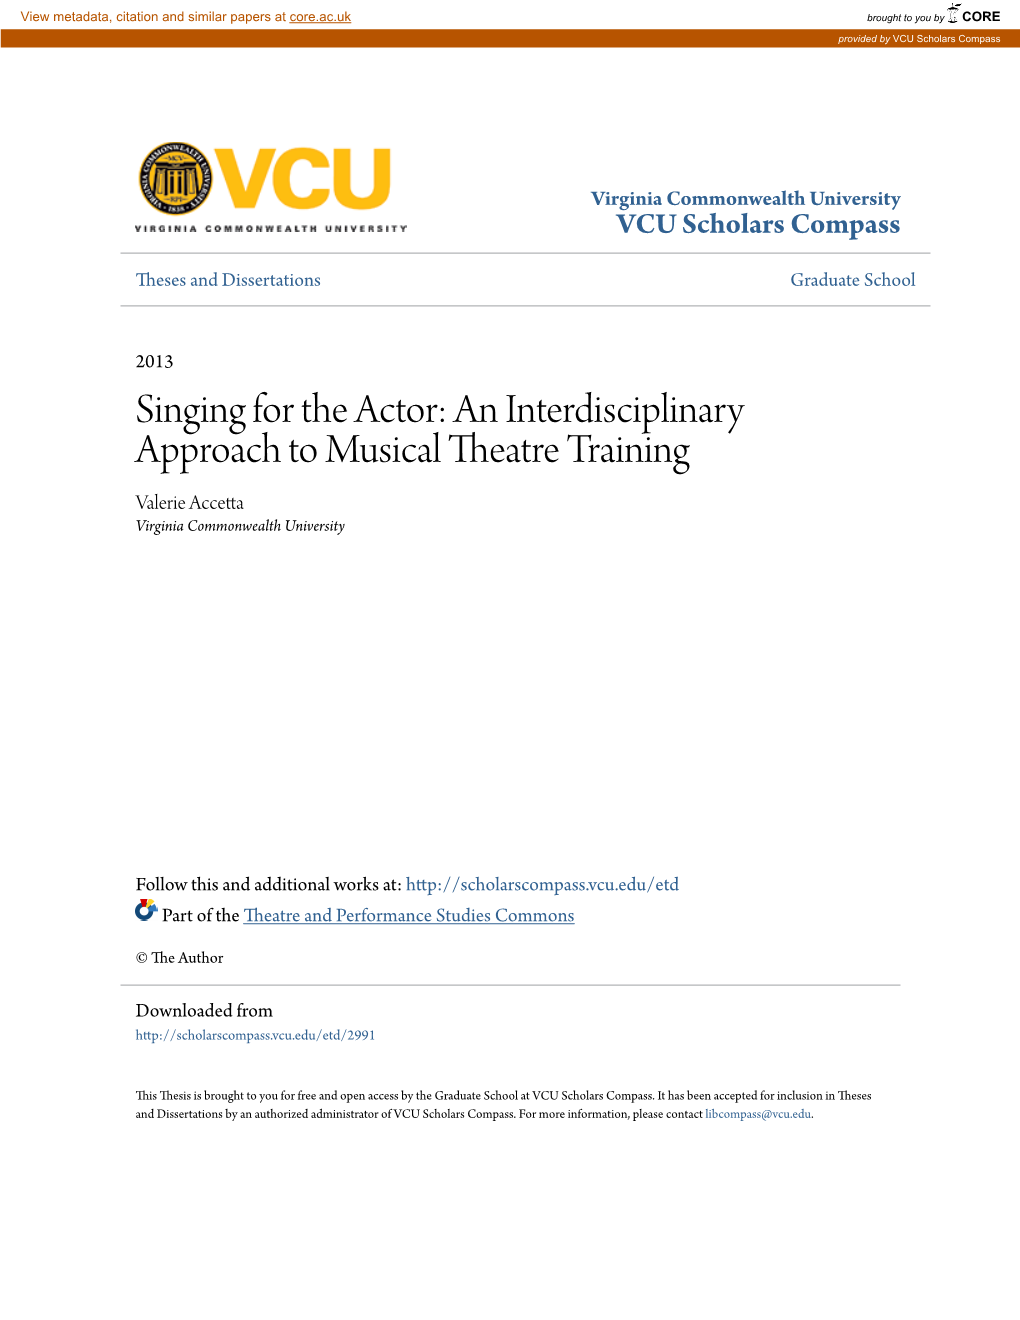 An Interdisciplinary Approach to Musical Theatre Training Valerie Accetta Virginia Commonwealth University